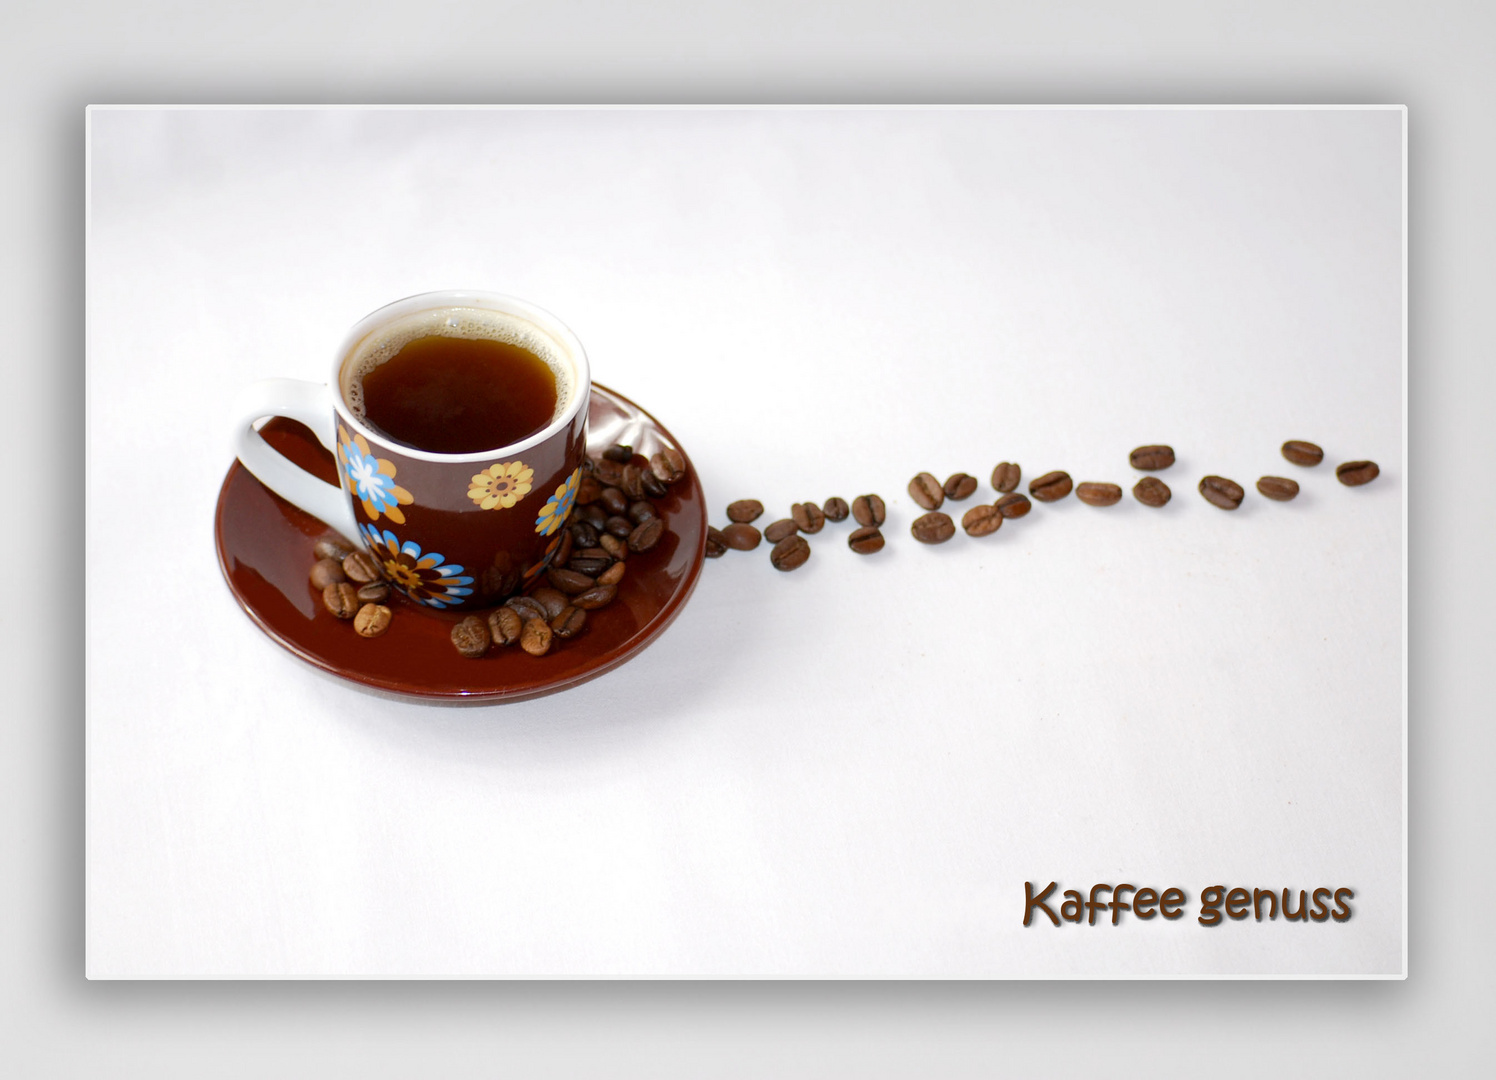 Kaffee genuss